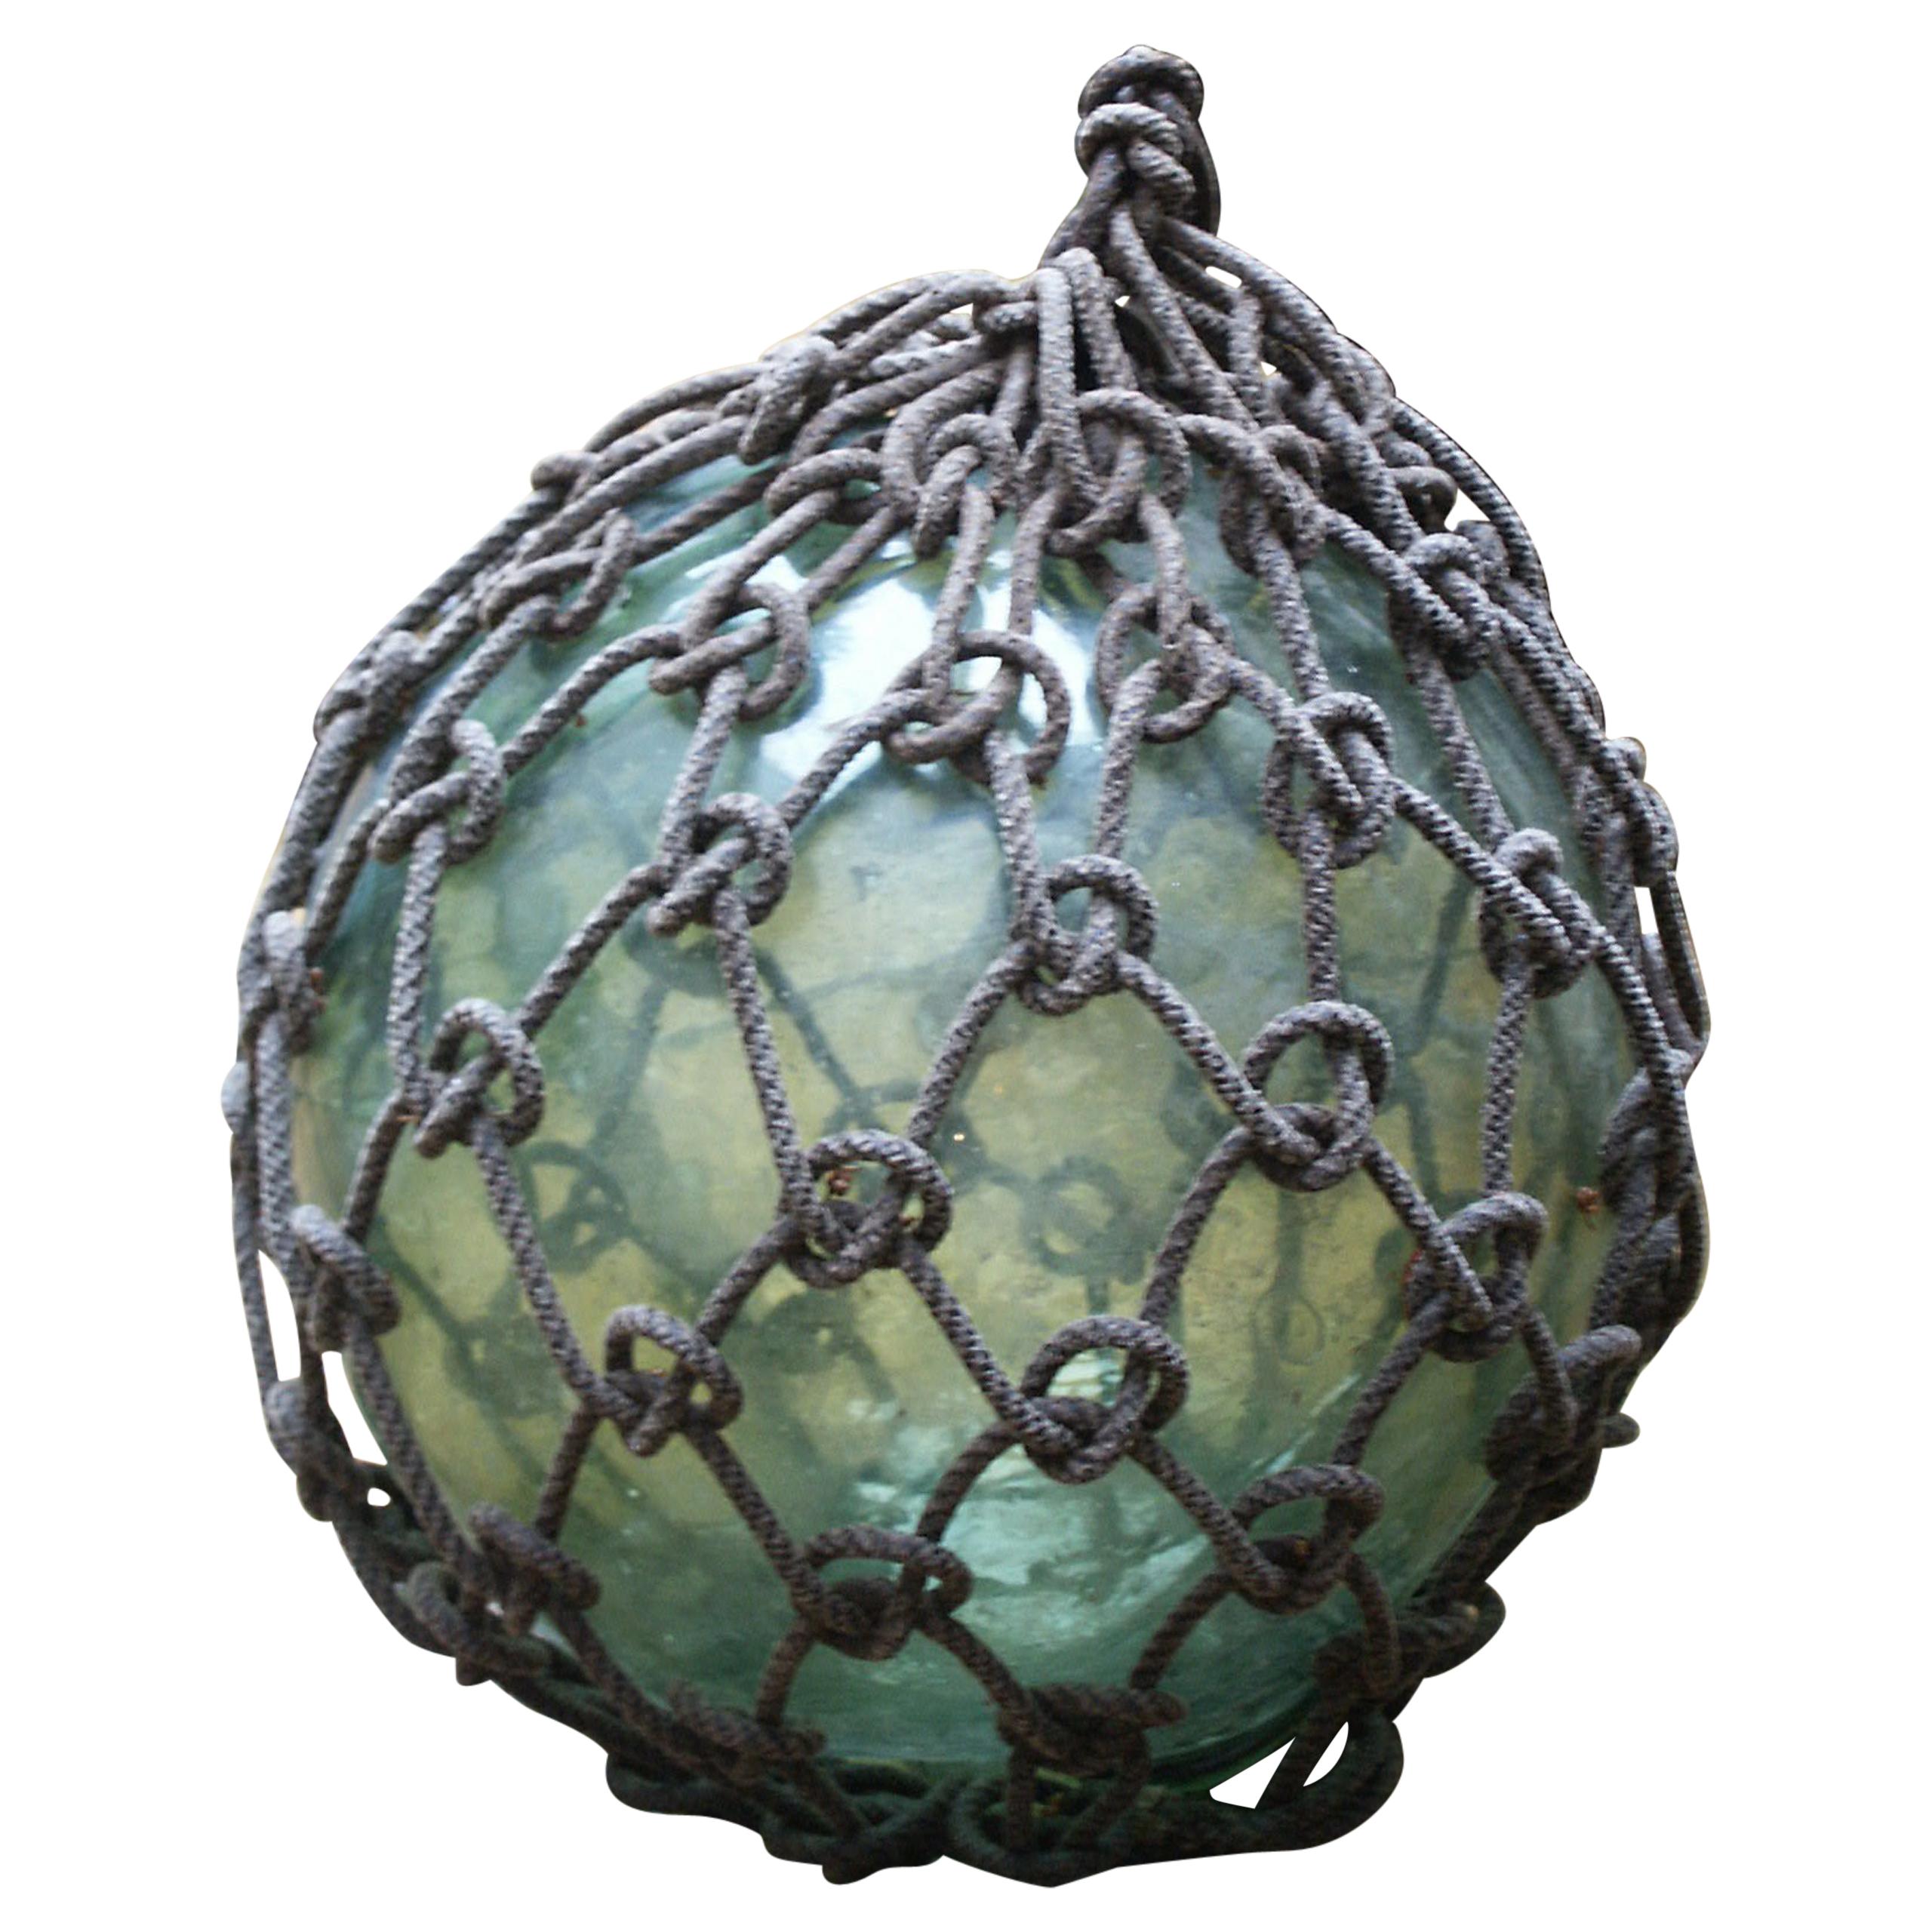 https://a.1stdibscdn.com/fishing-float-early-20th-century-glass-rope-ornament-sea-fishermen-for-sale/1121189/f_157989621567235633764/15798962_master.jpg